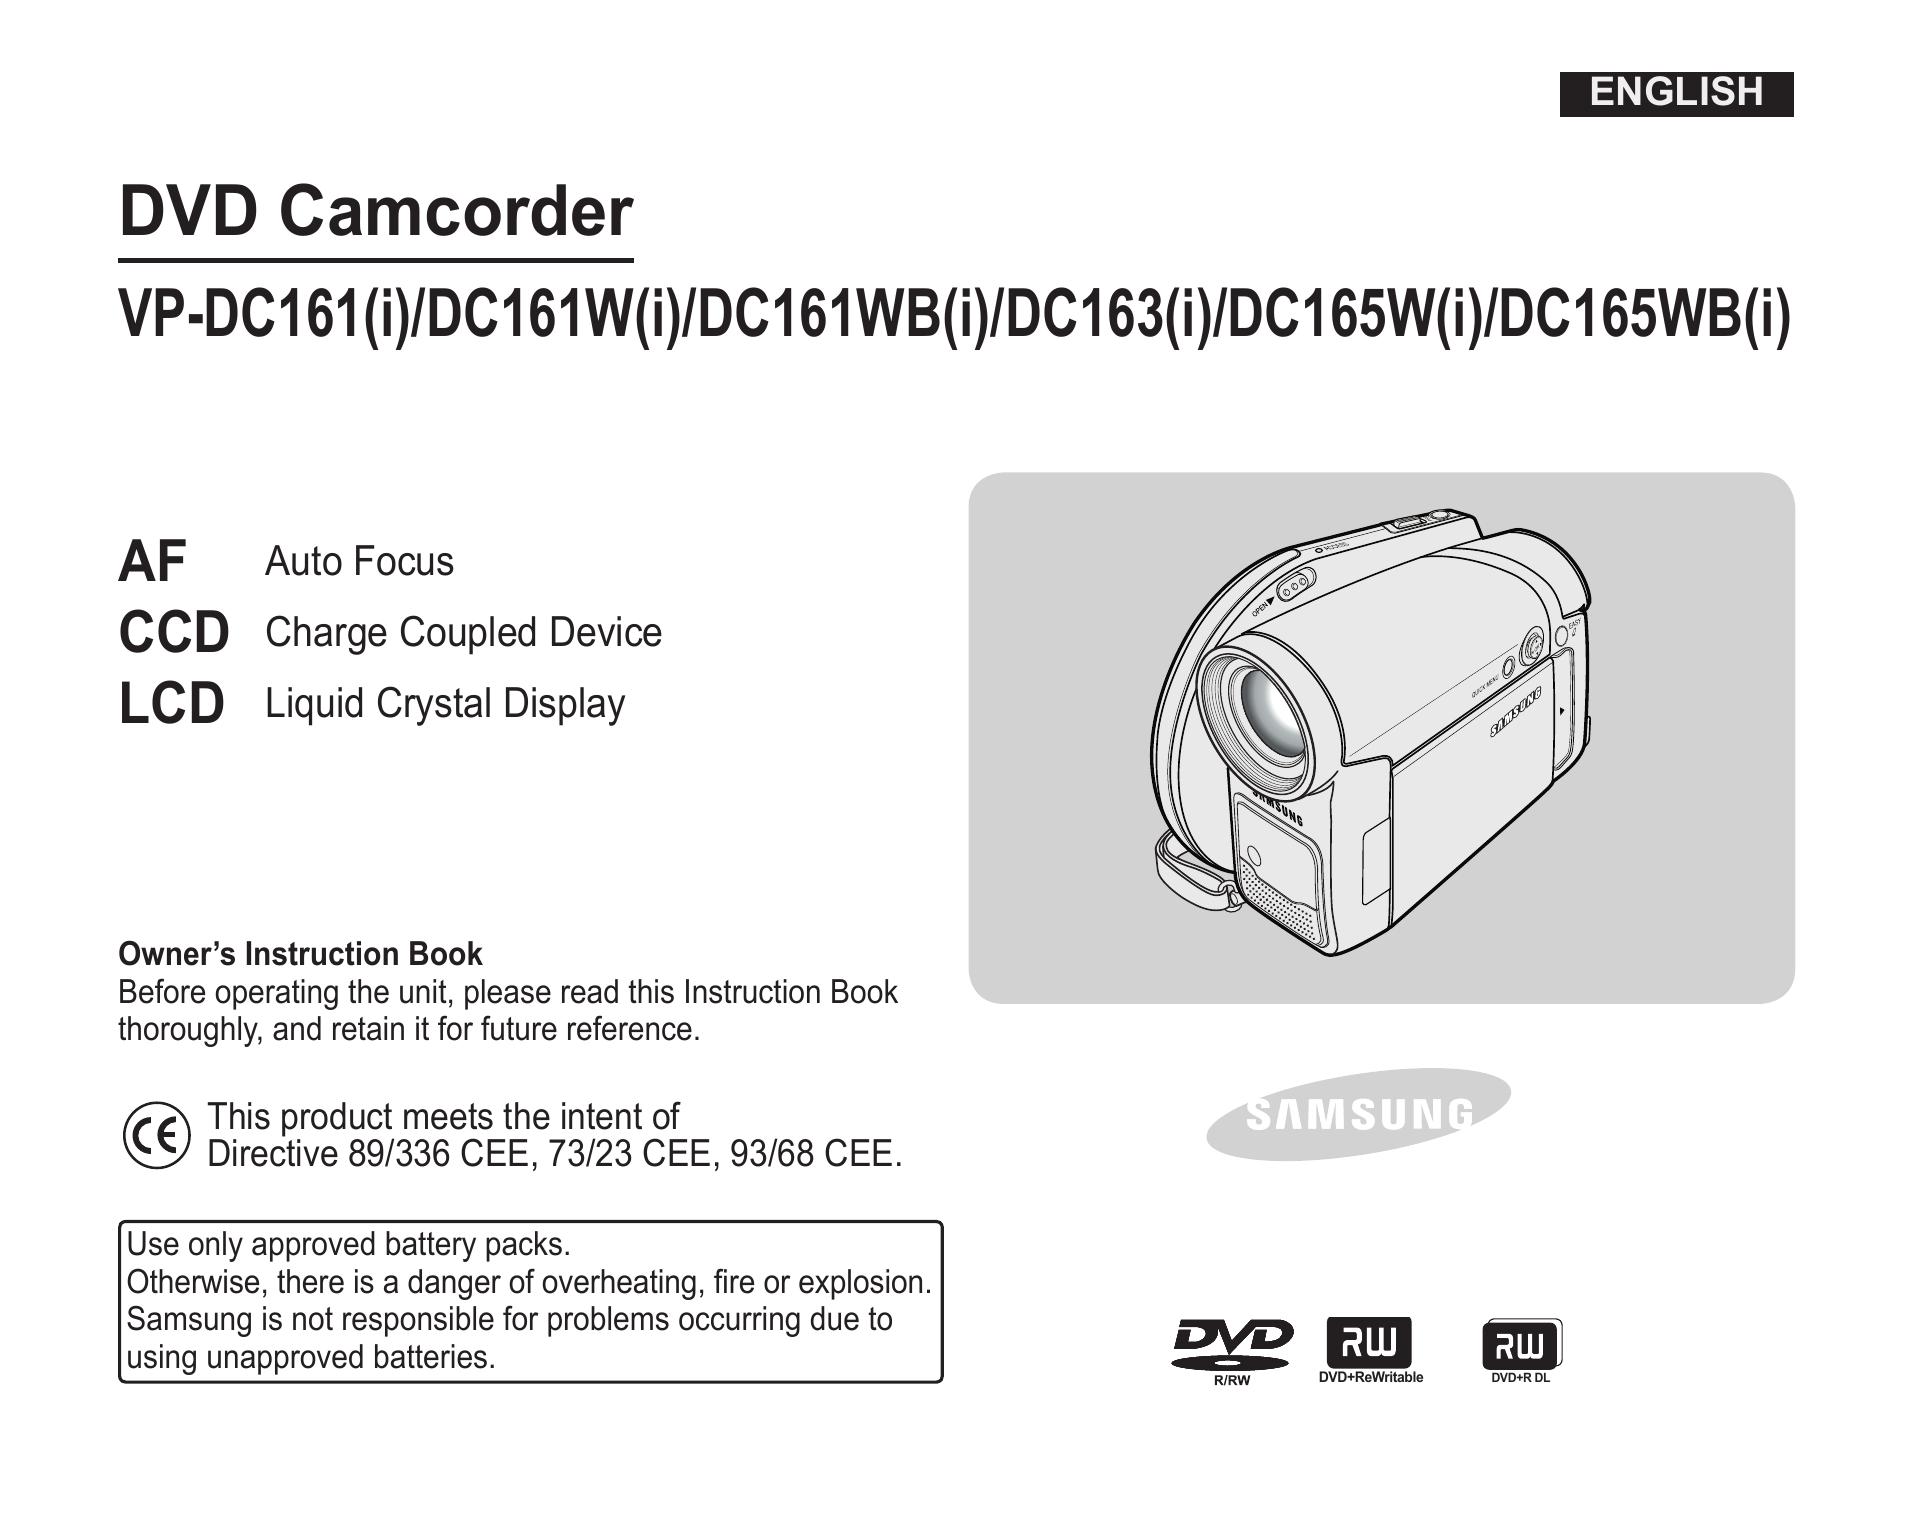 Samsung DC161WB(i) Camcorder User Manual